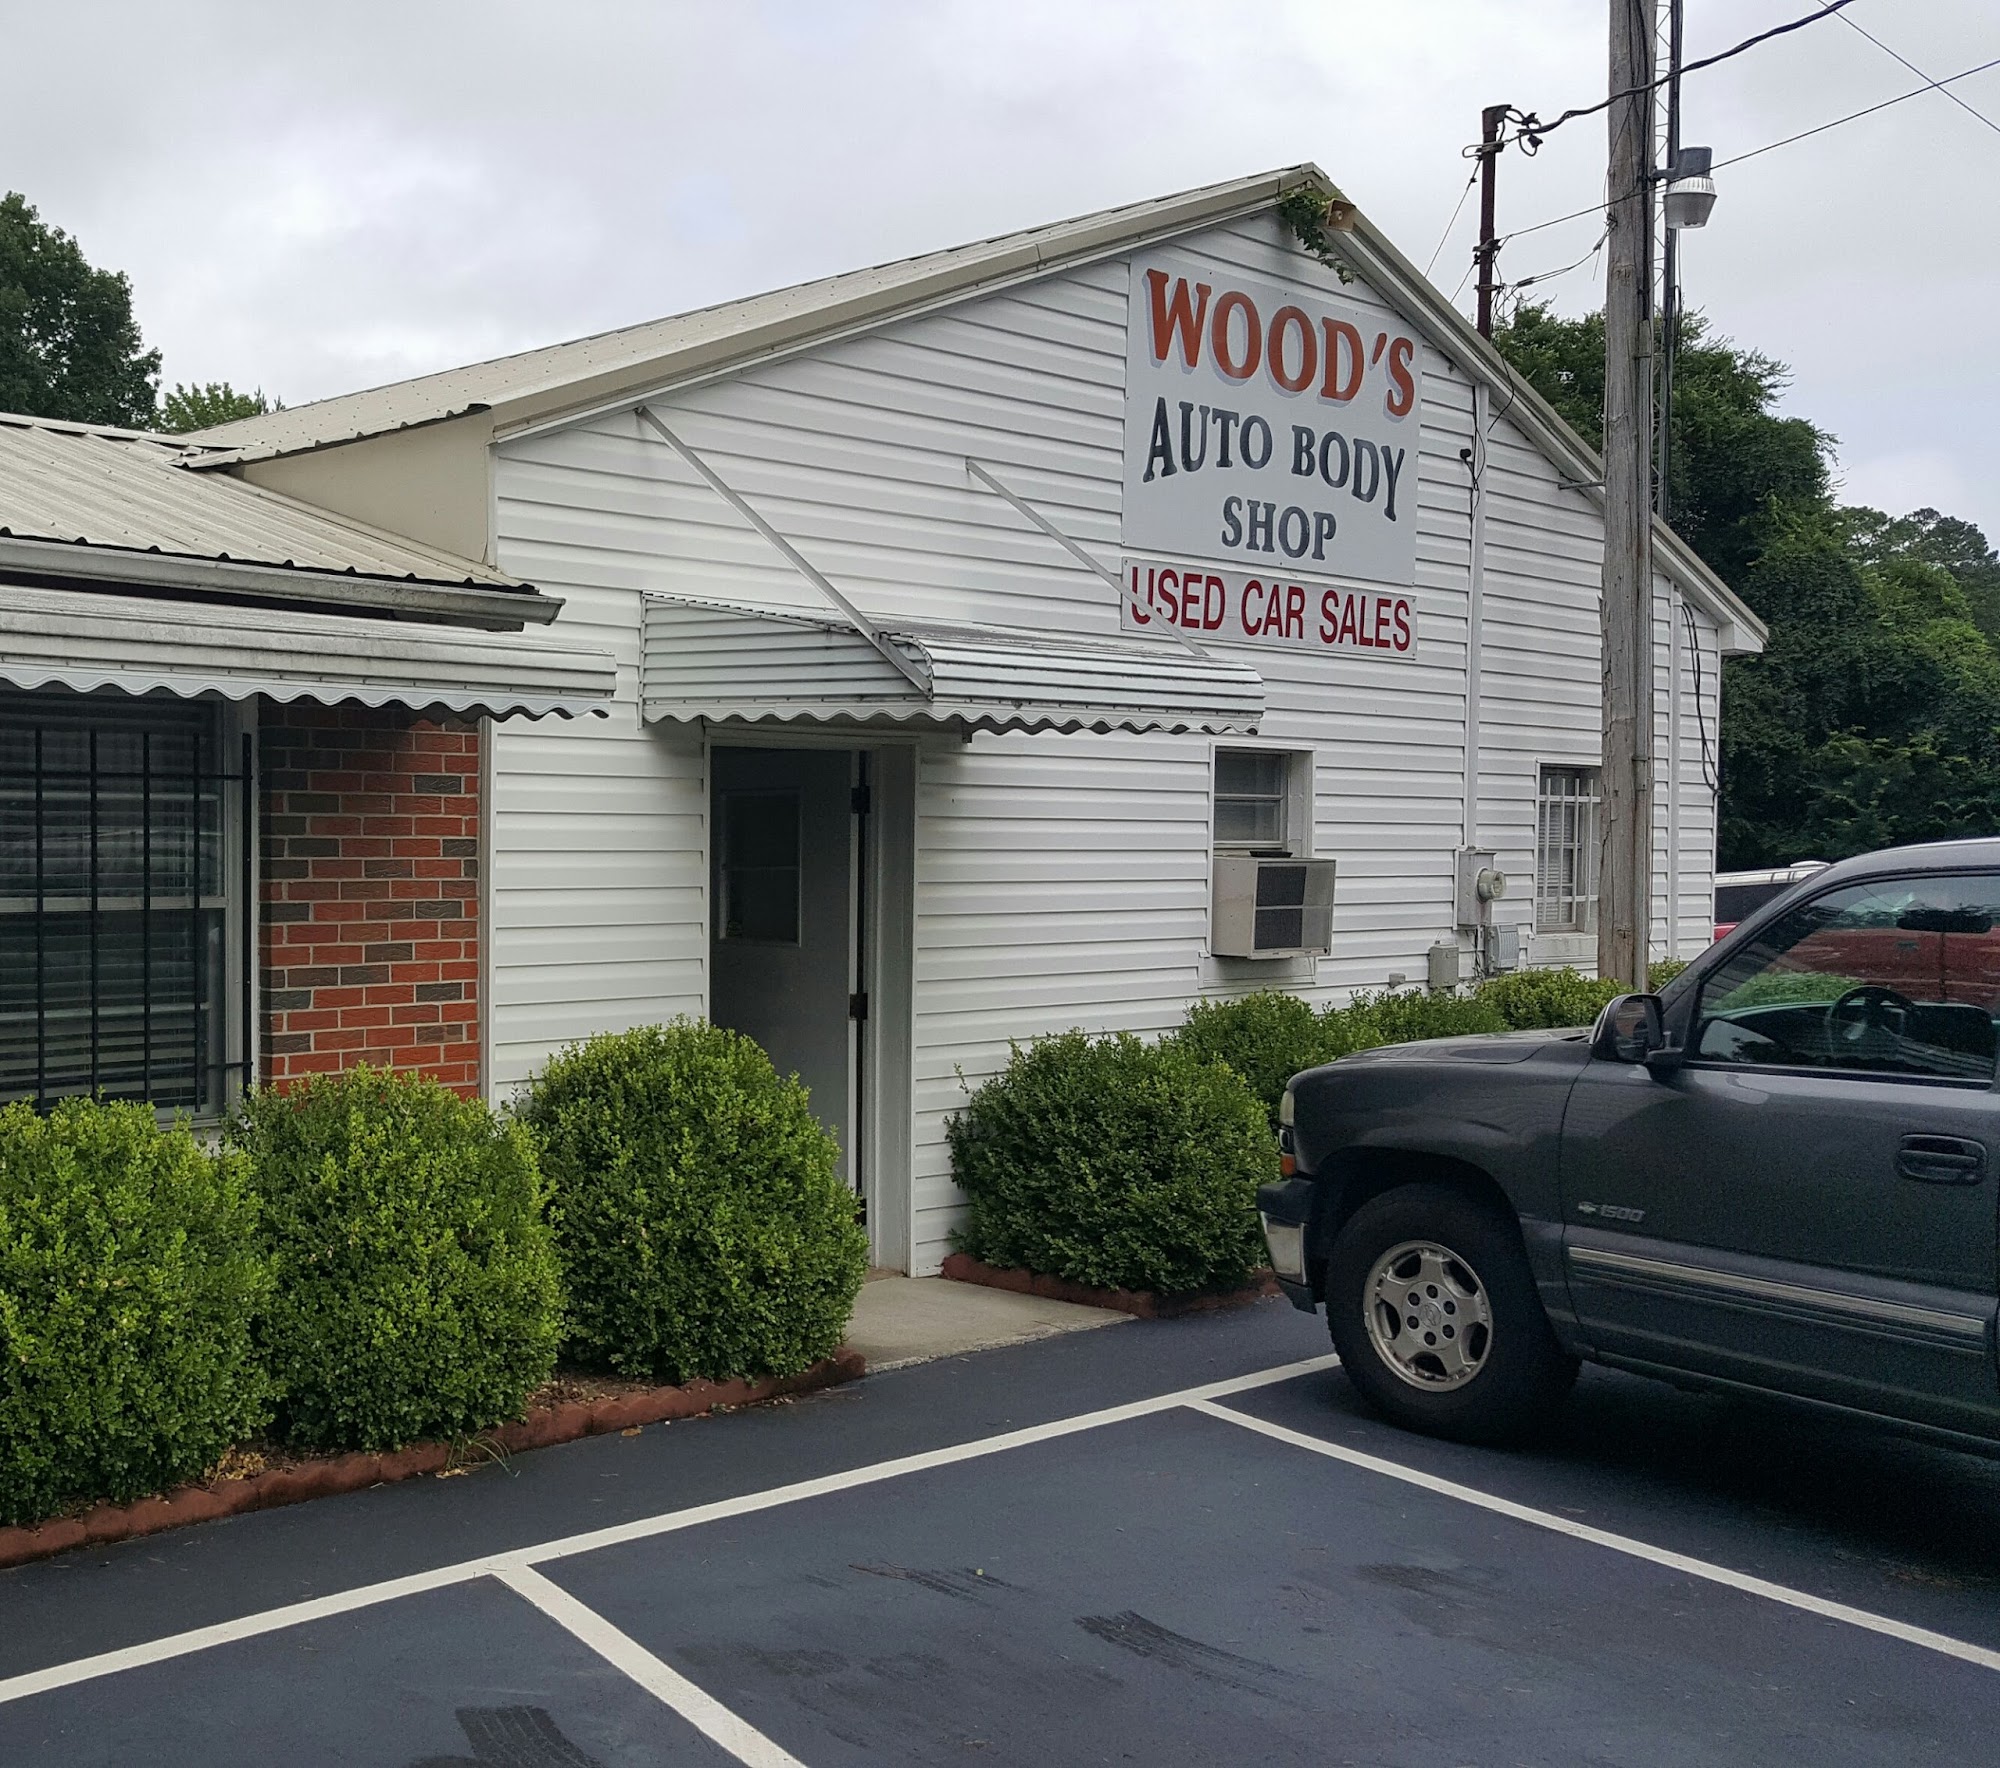 Wood's Auto Body Shop